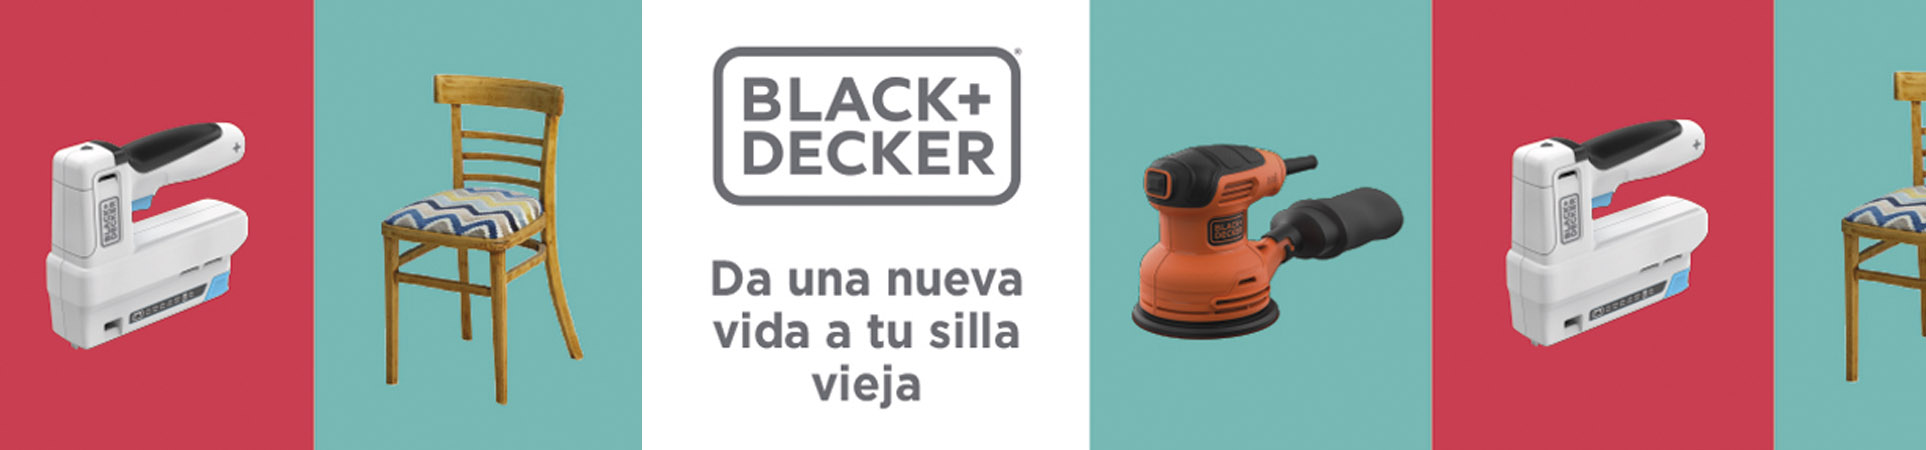 DIY Da Vida a tu Silla Vieja - BLACK+DECKER